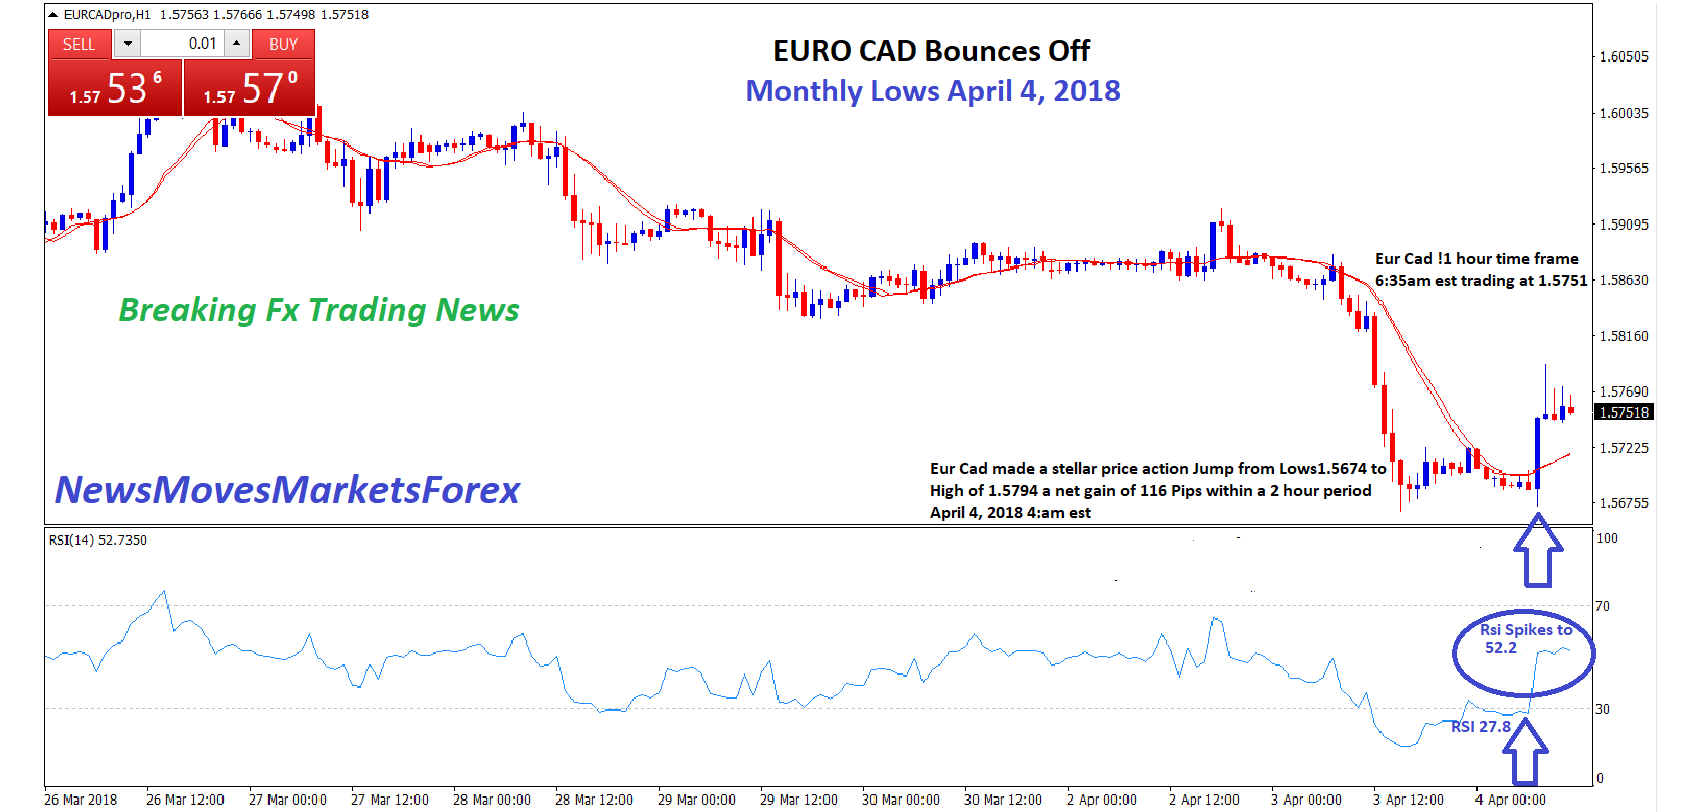 Euro Vs Cad Chart